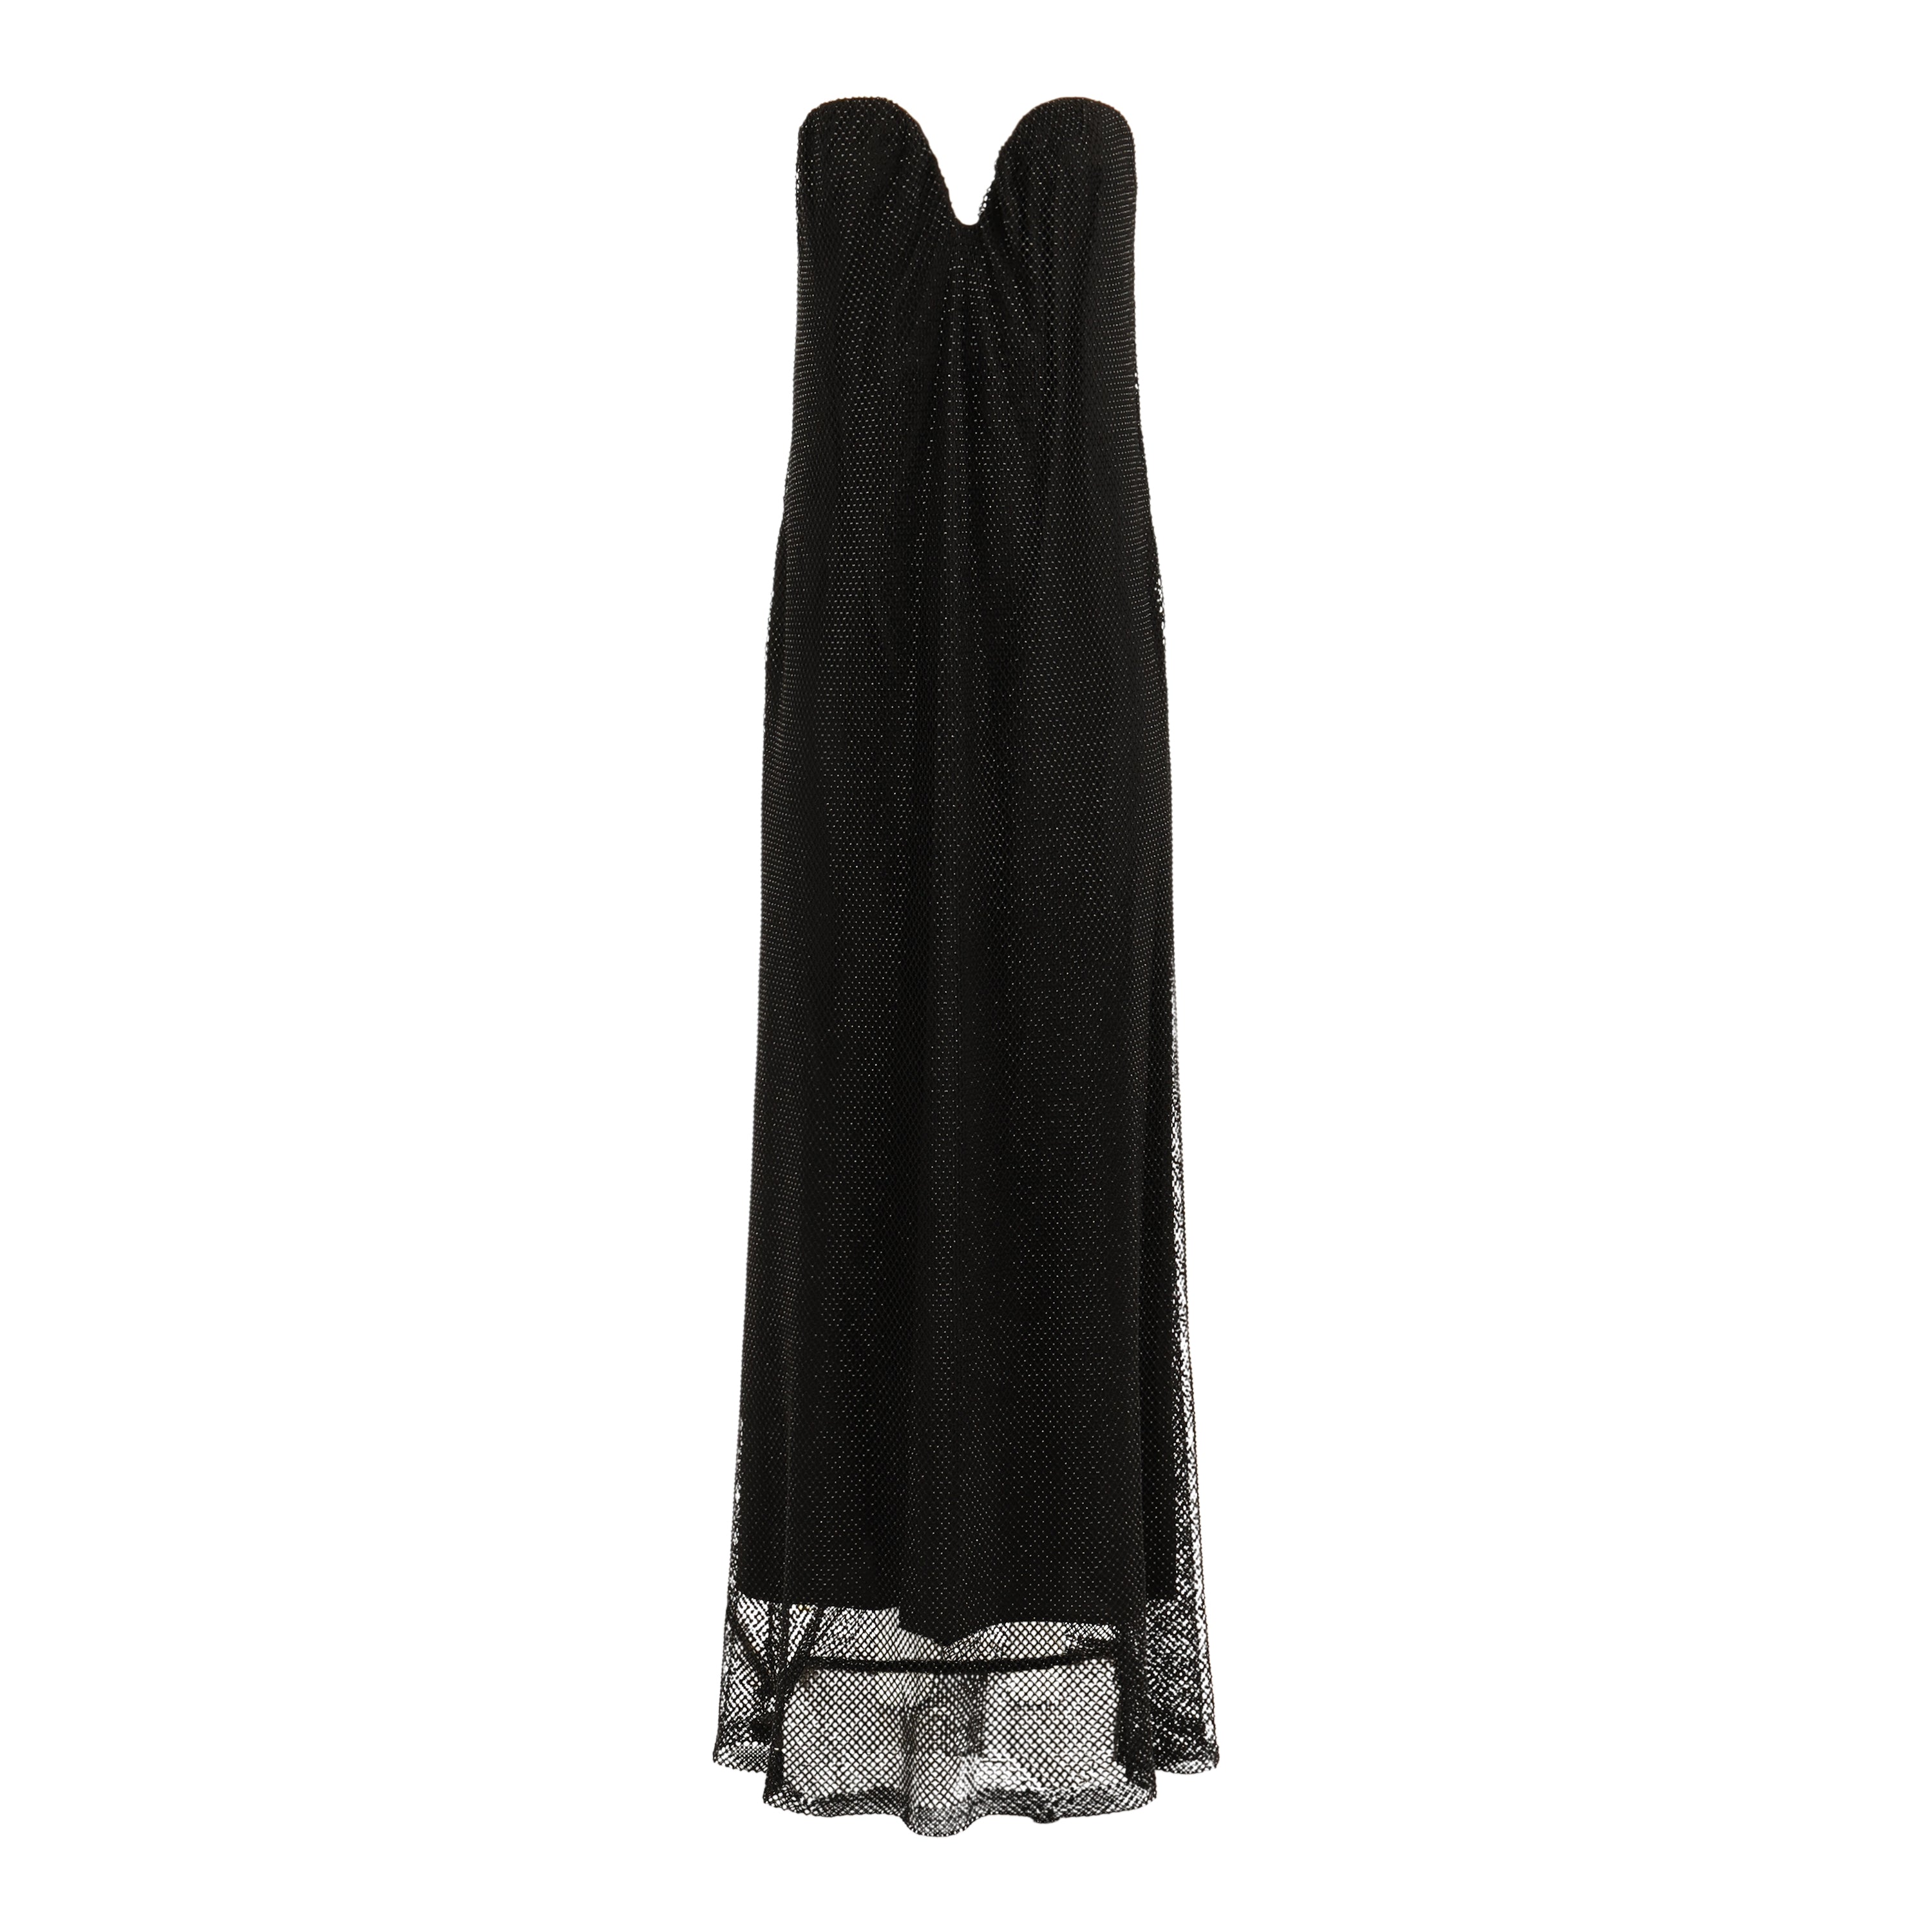 Black Crystal Strapless Hidden Corset Gown